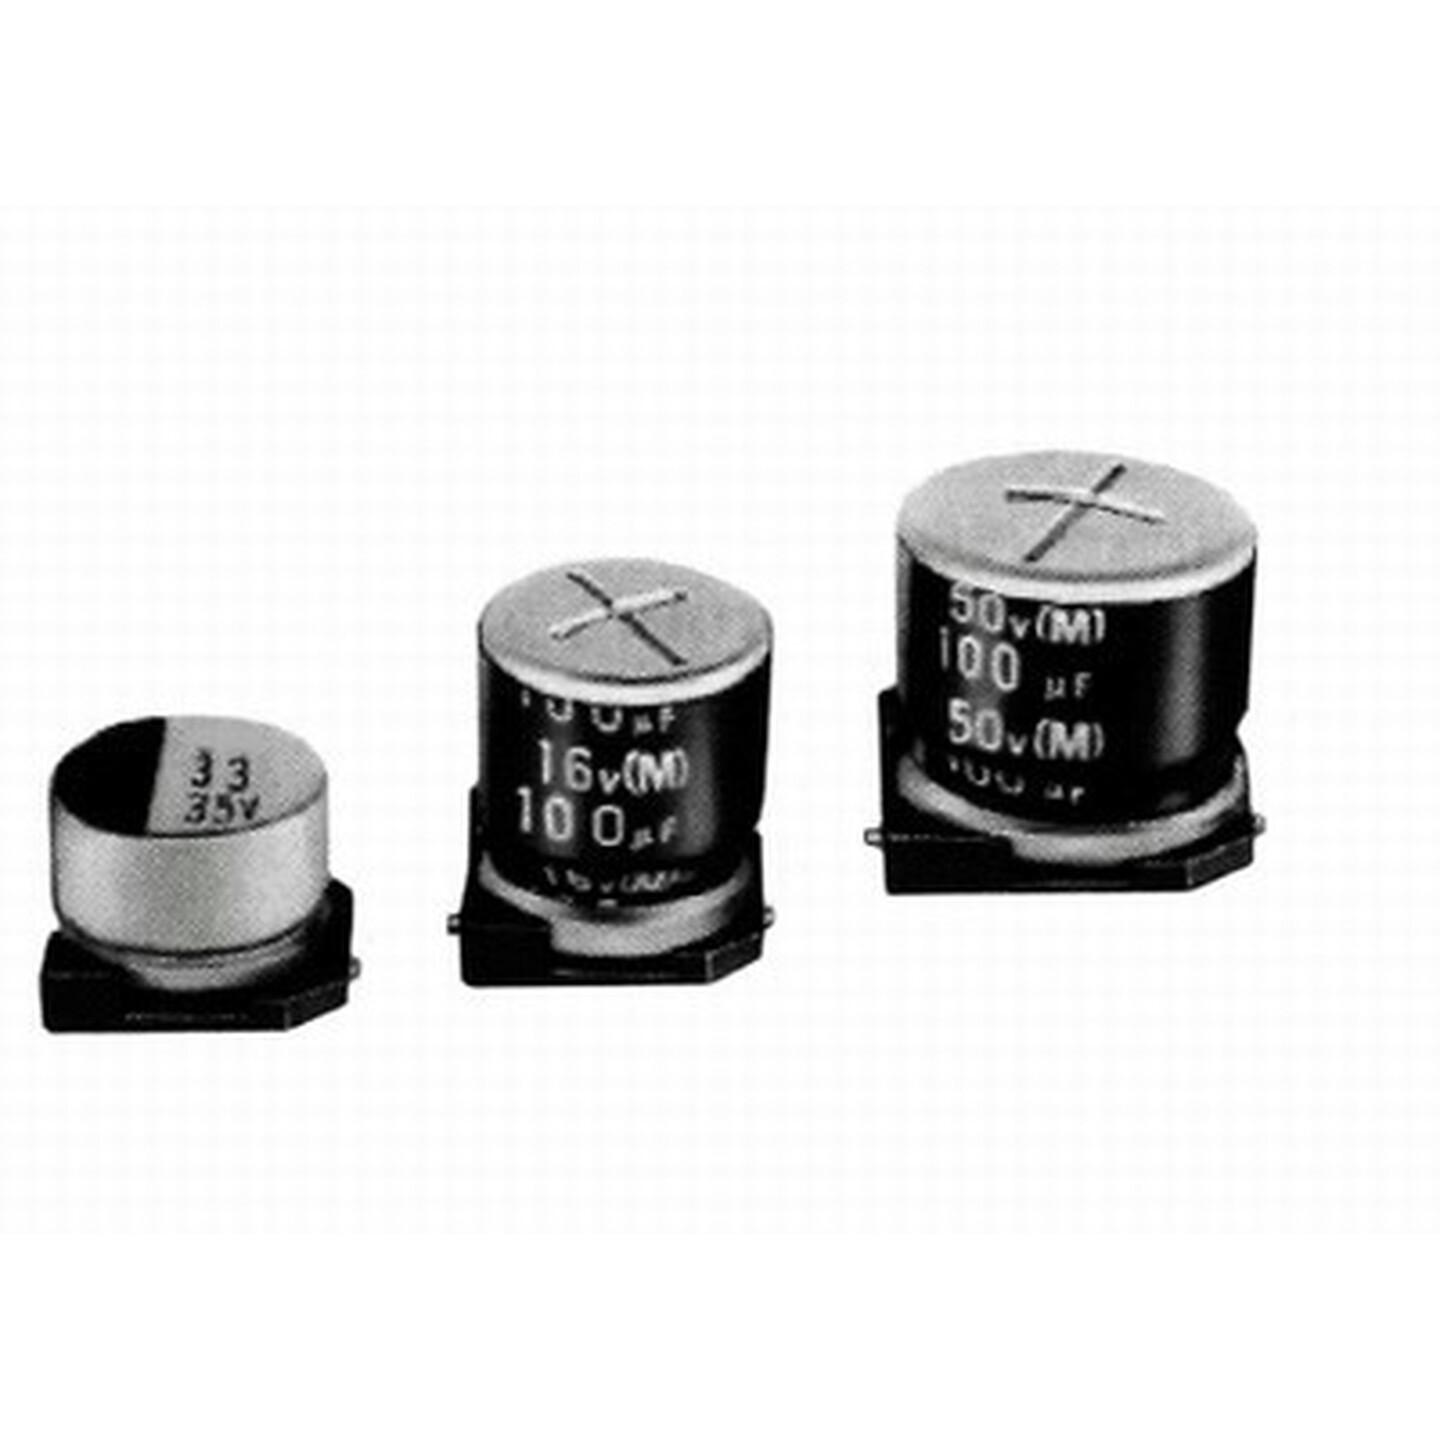 SMD Capacitor Electrolytic 100uF 35V - Pack 10